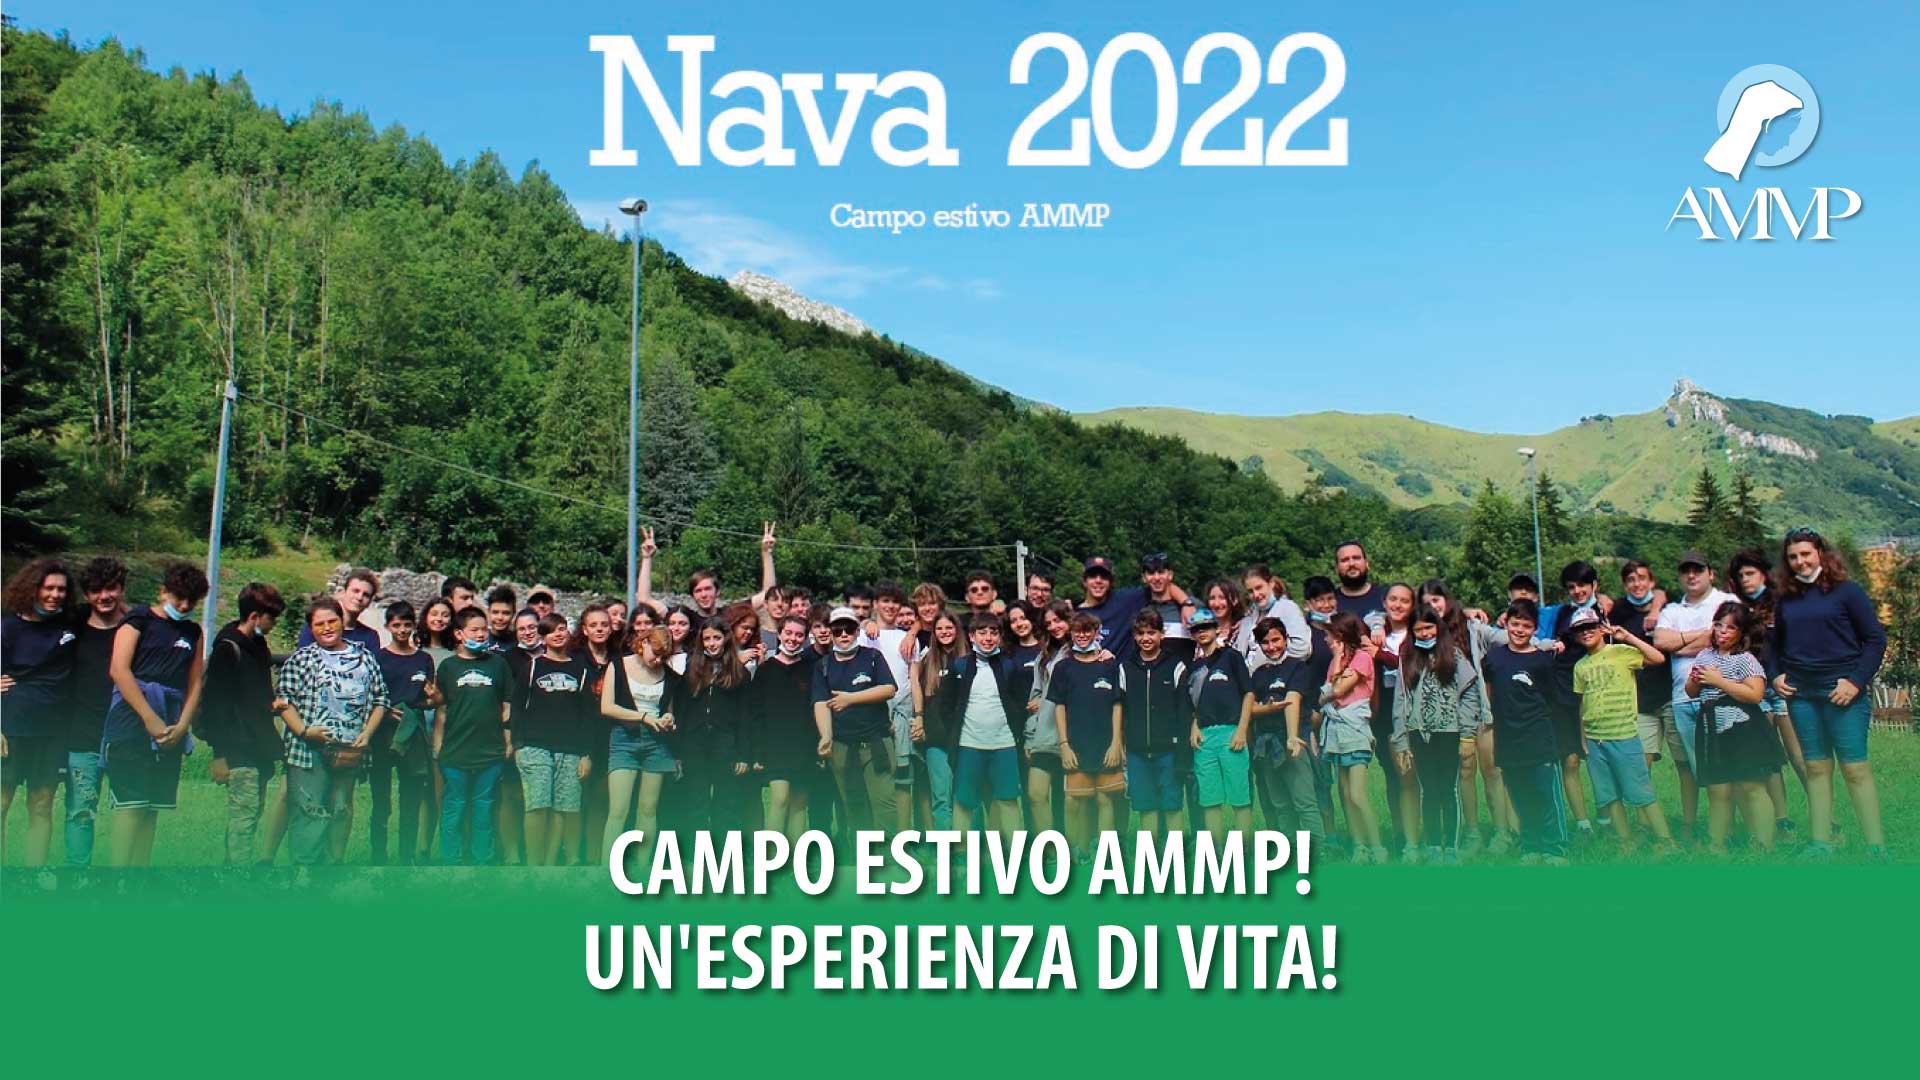 campo estivo AMMP - Nava 2022